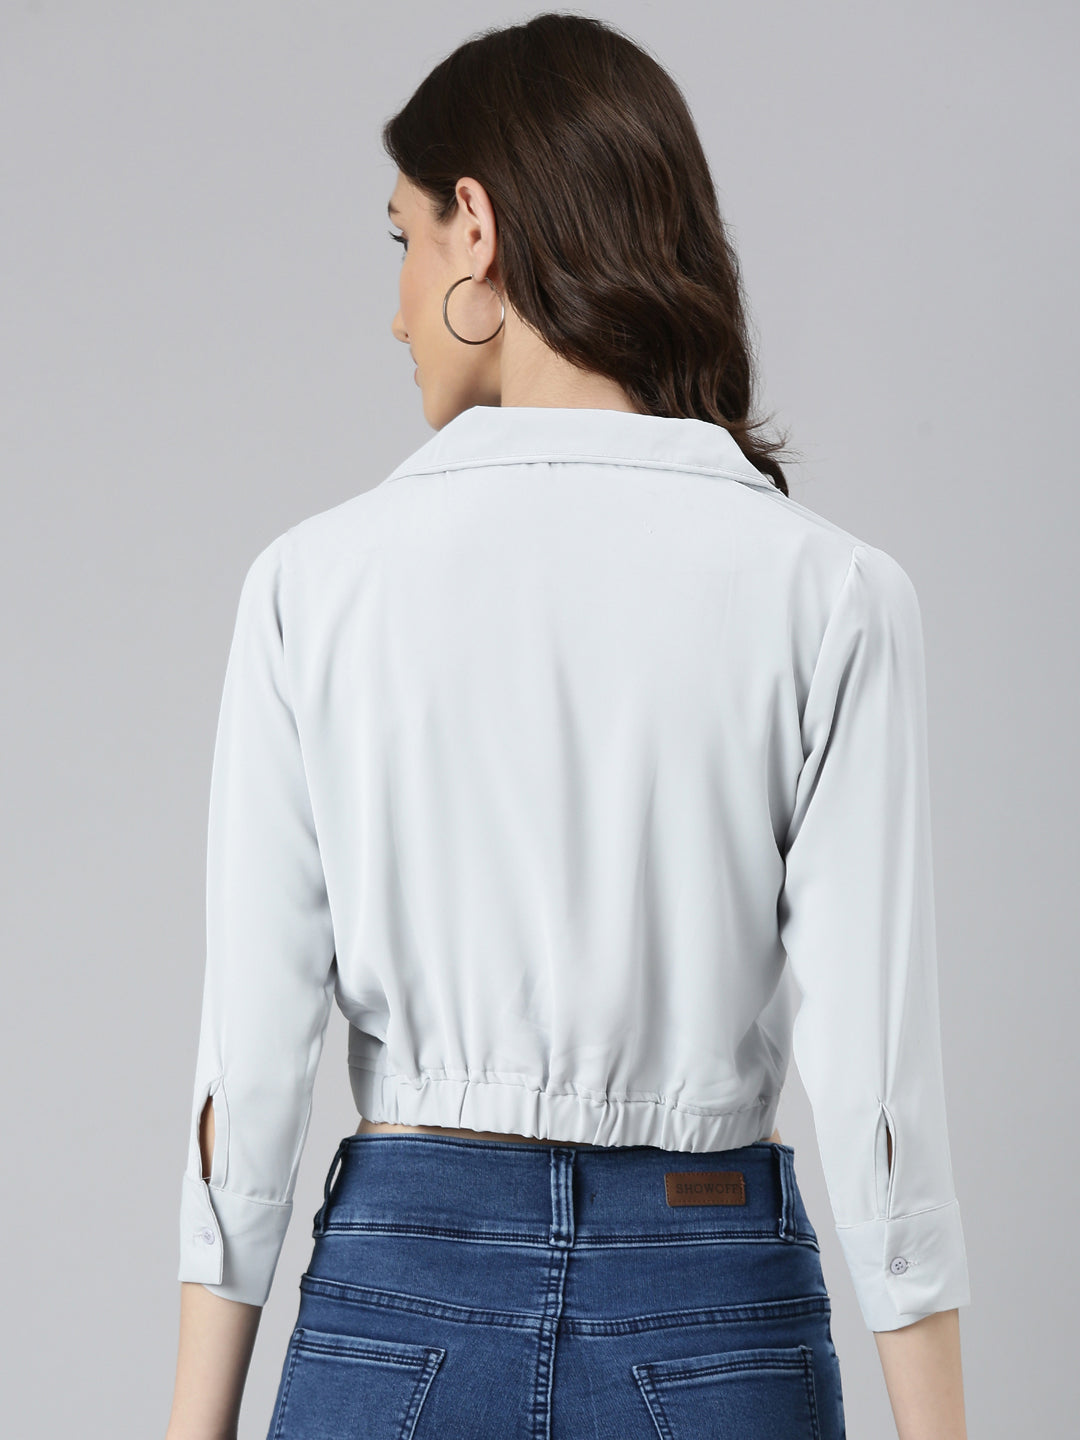 Women Grey Solid Shirt StyleCrop Top